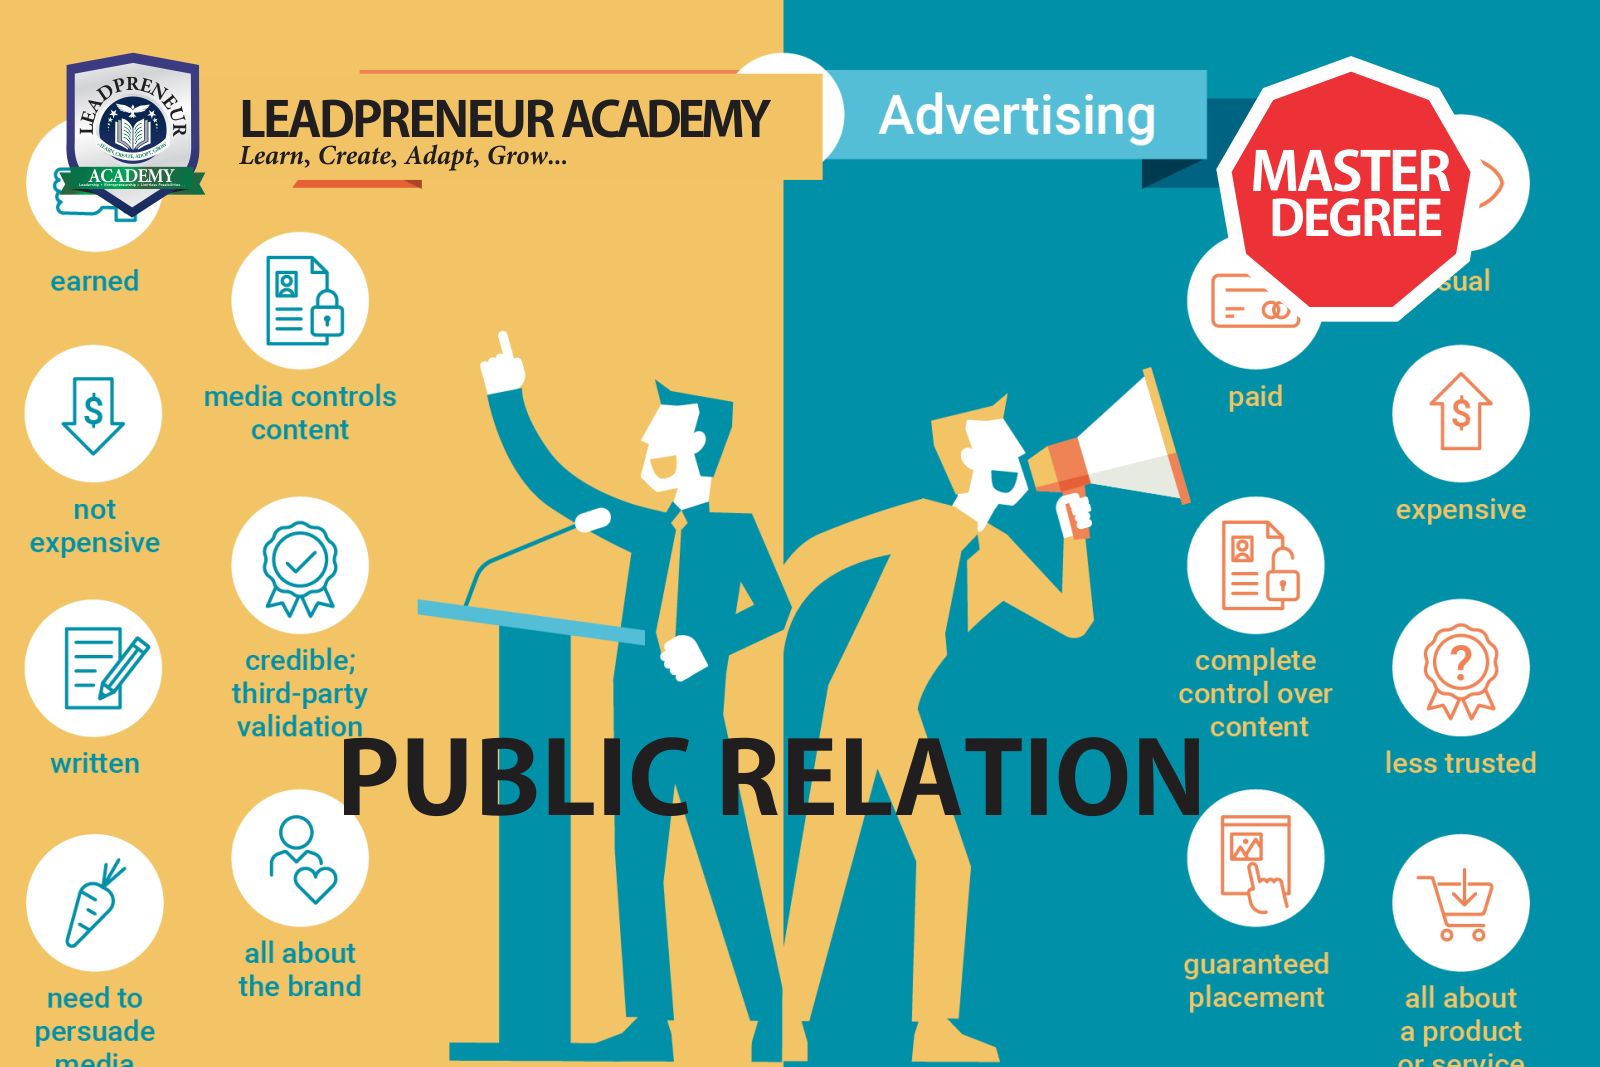 M.Sc Public Relations - Leadpreneur Academy - Apply now